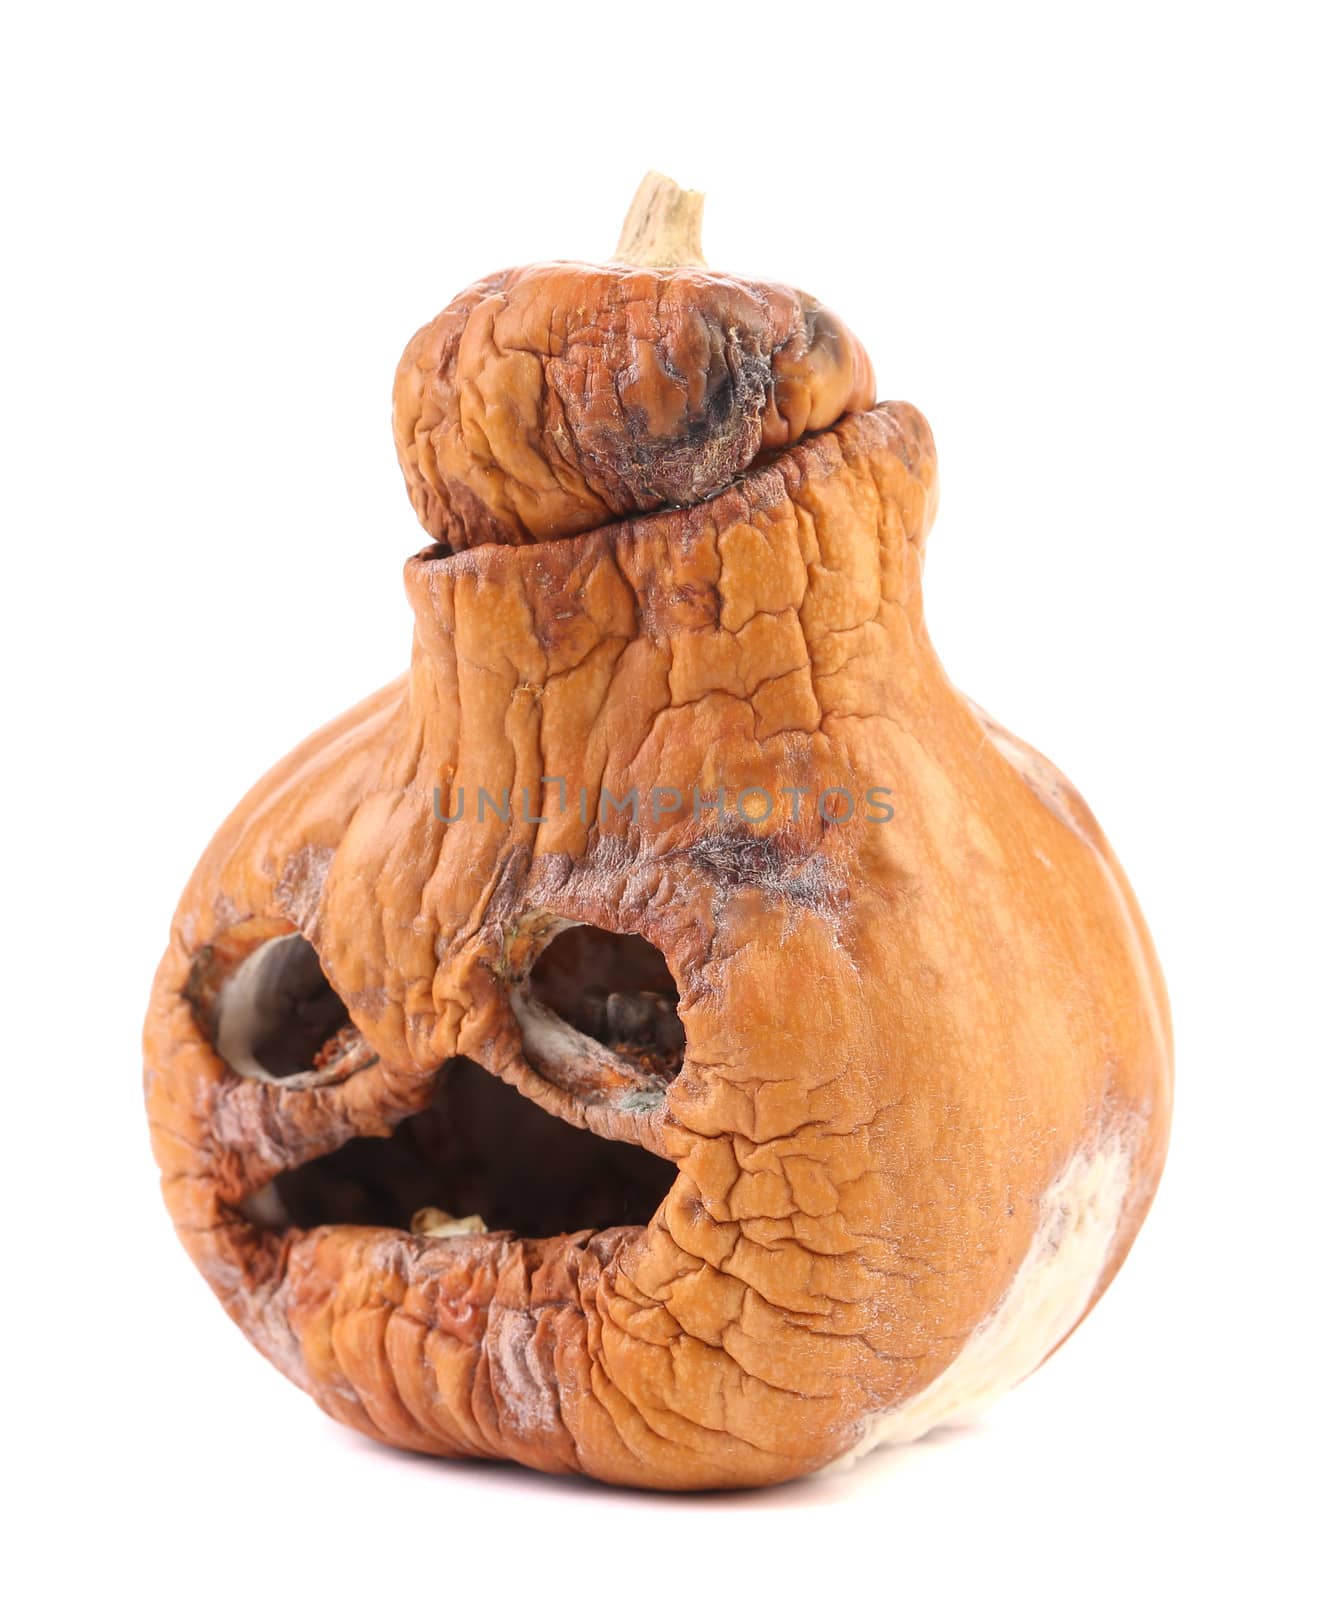 Old halloween pumpkin. by indigolotos